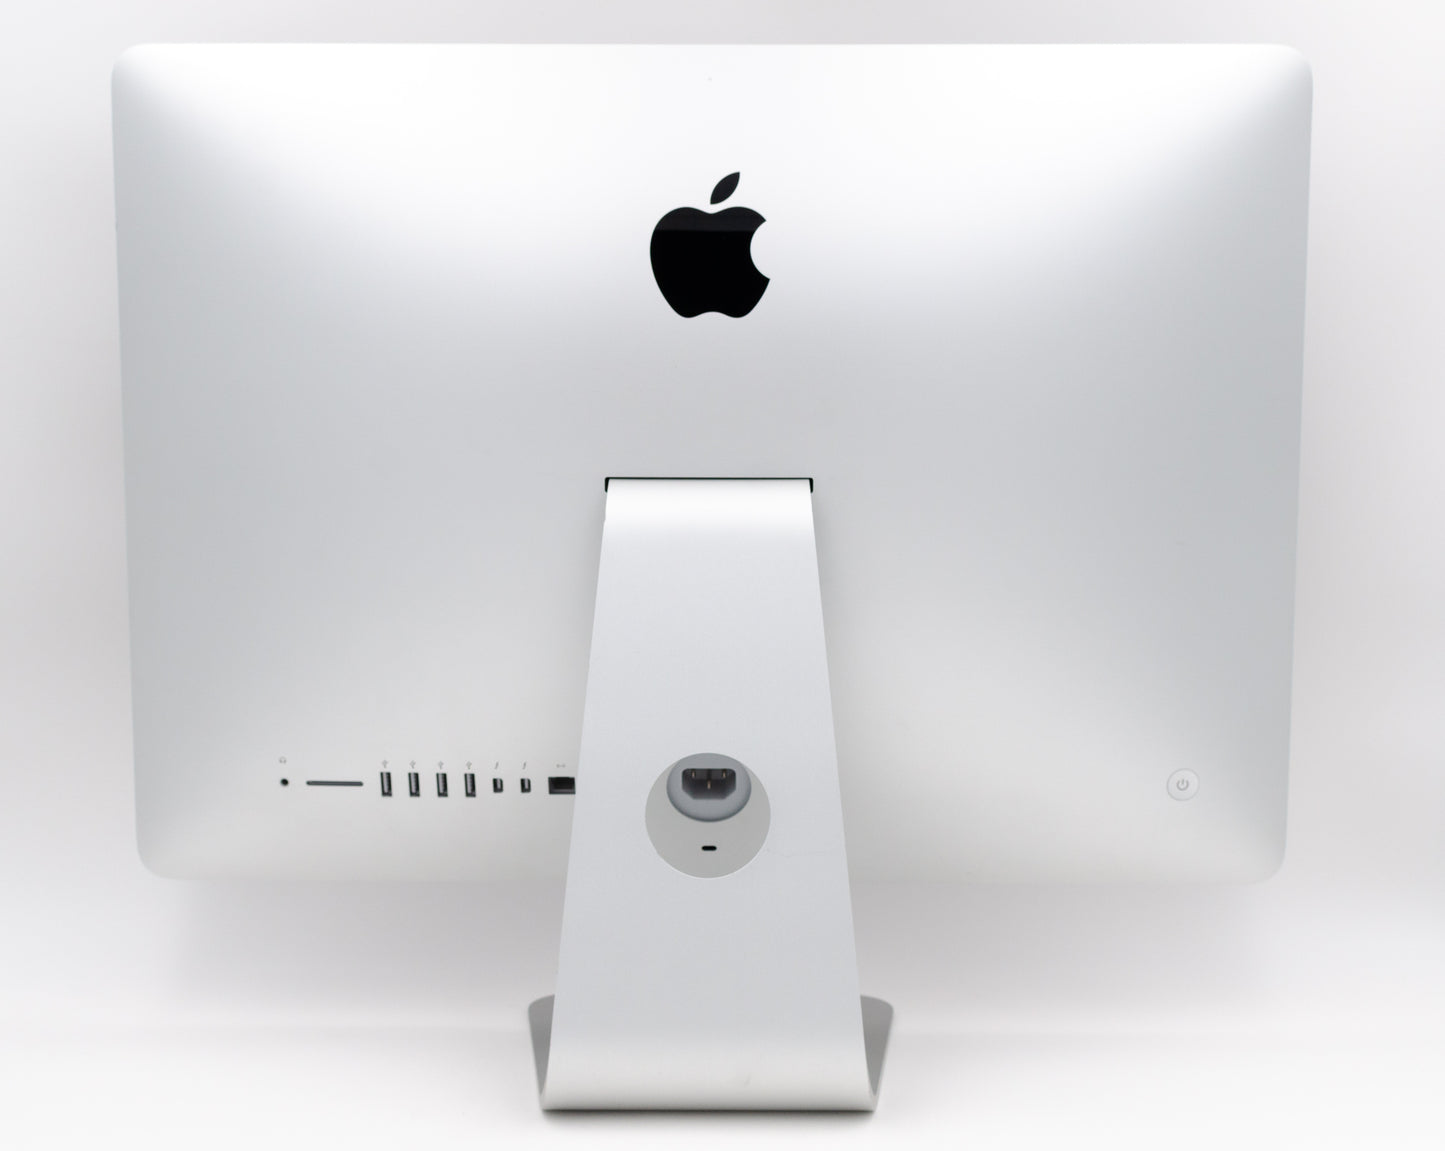 apple-mid-2014-21.5-inch-imac-ultra-thin-a1418-aluminum-dci5 - 1.4ghz, 8gb ram, pro 5000 - 1.5gb gpu-4